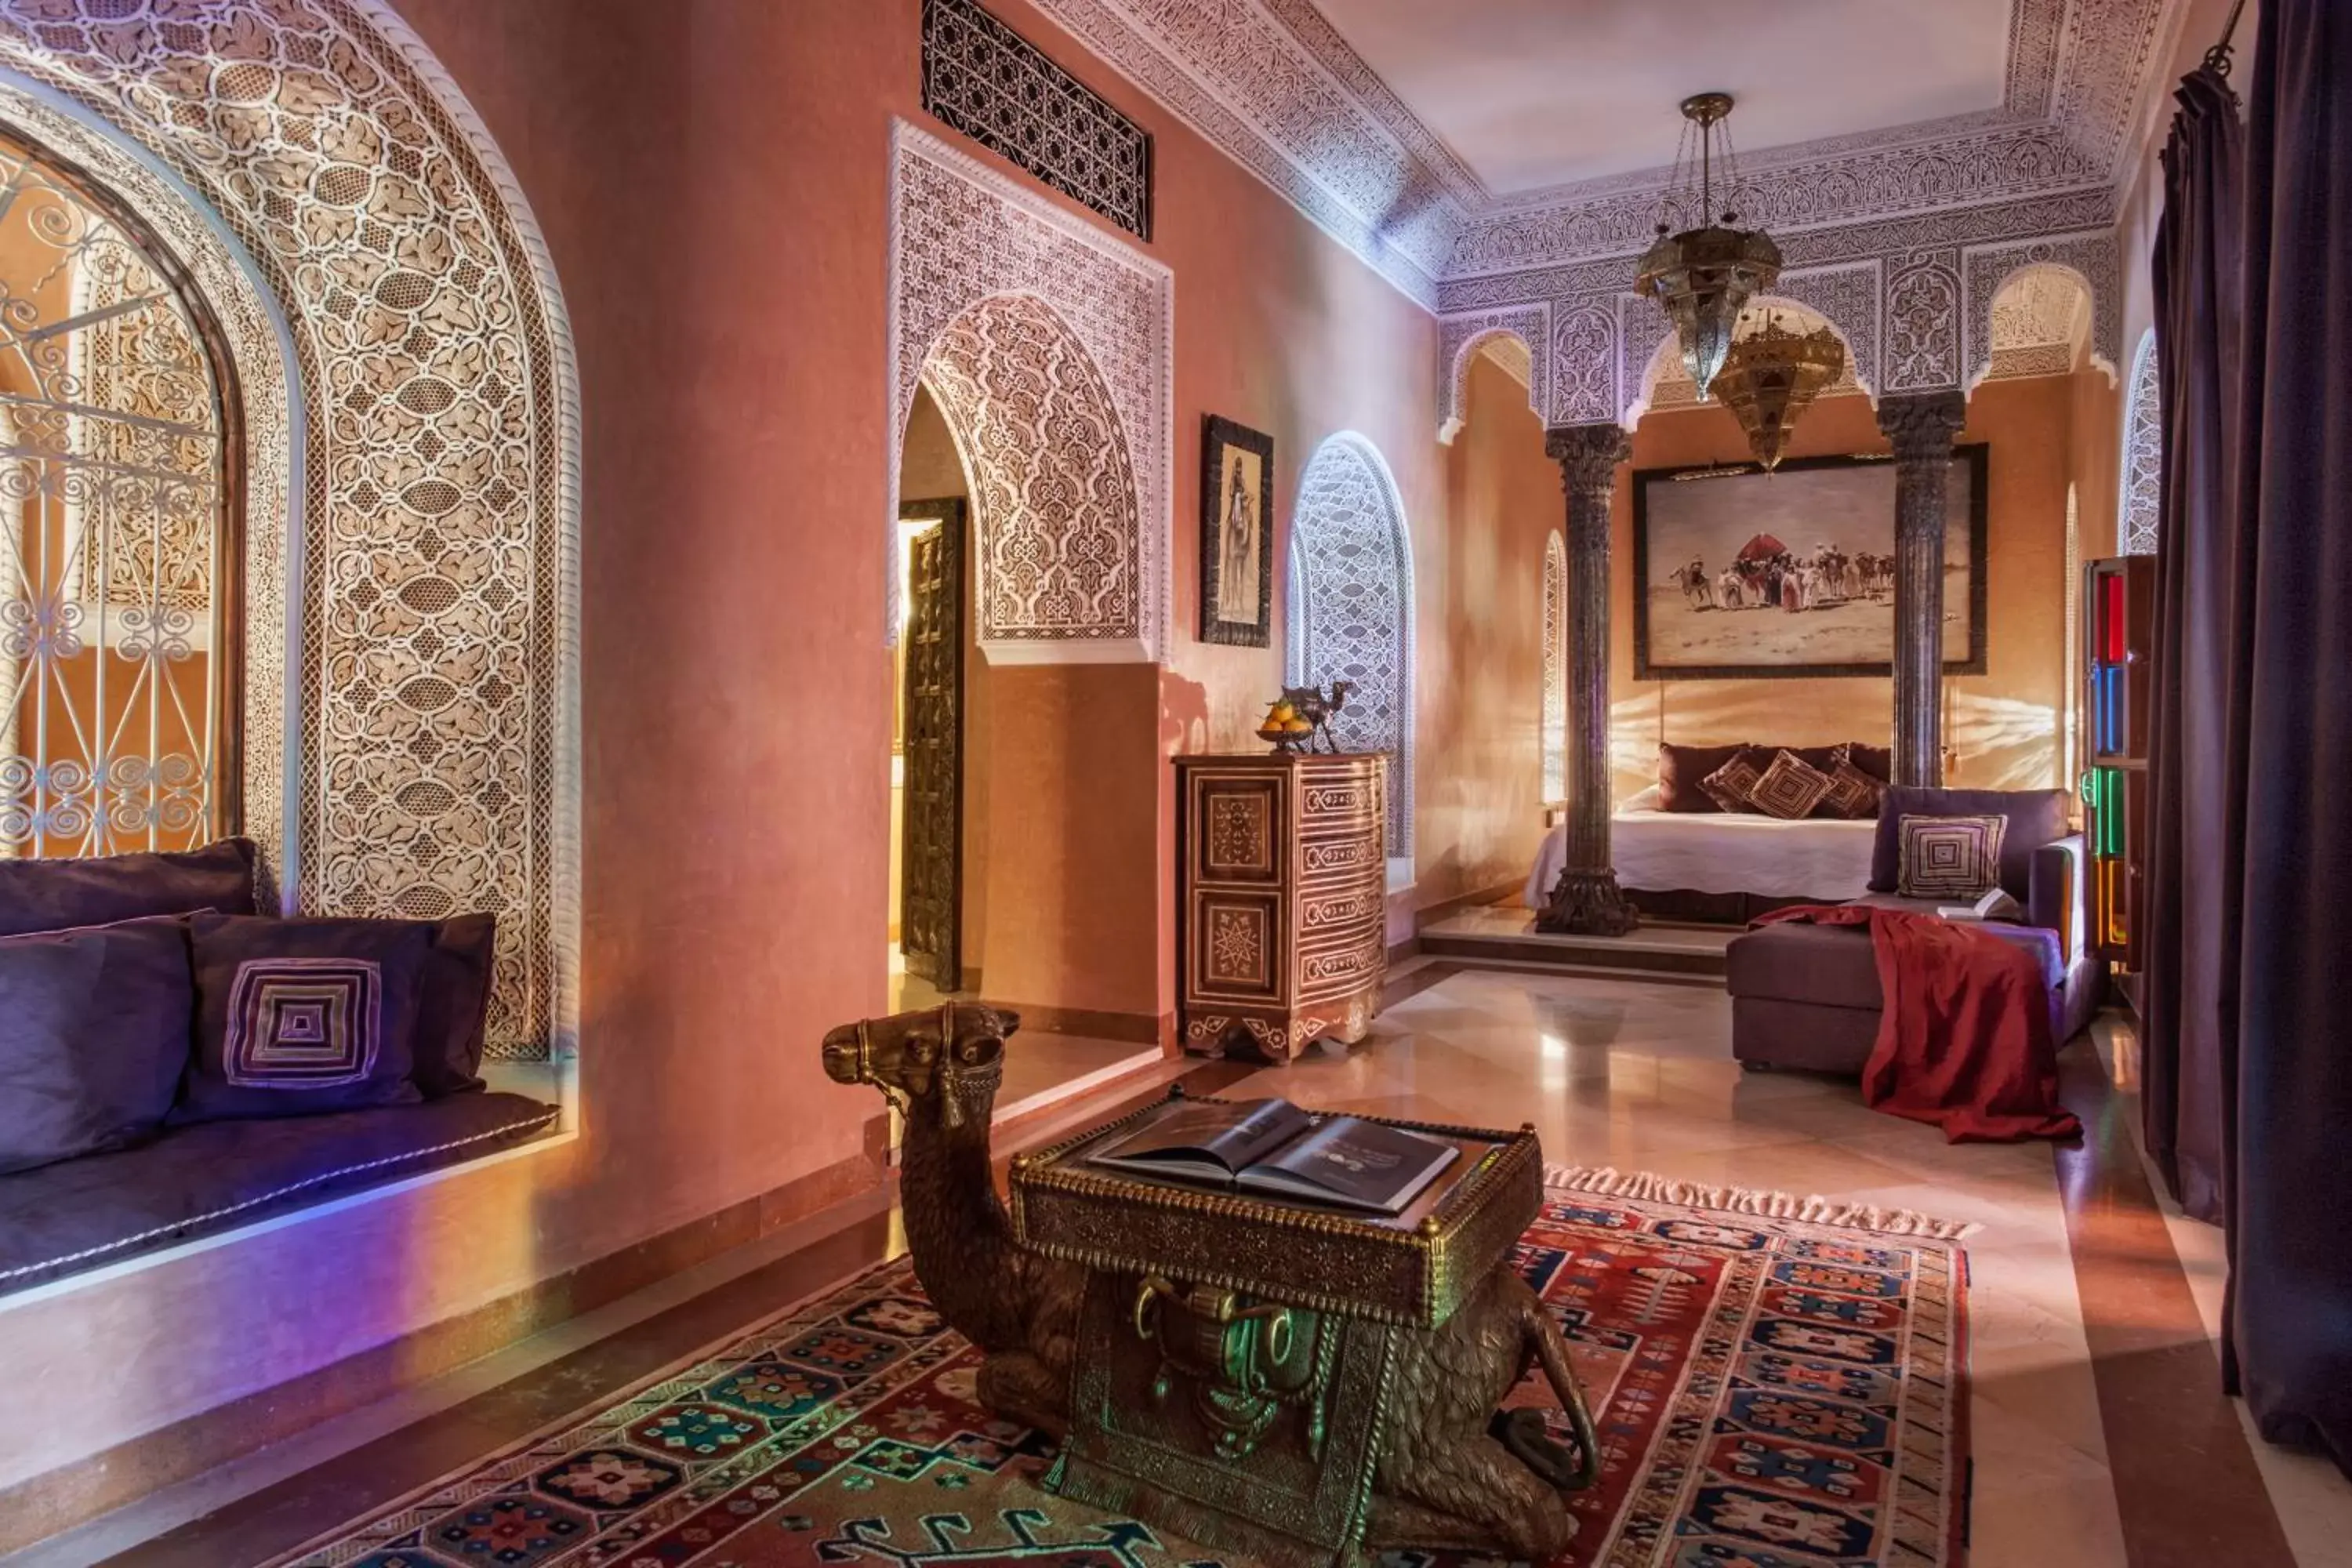 Photo of the whole room in La Sultana Marrakech